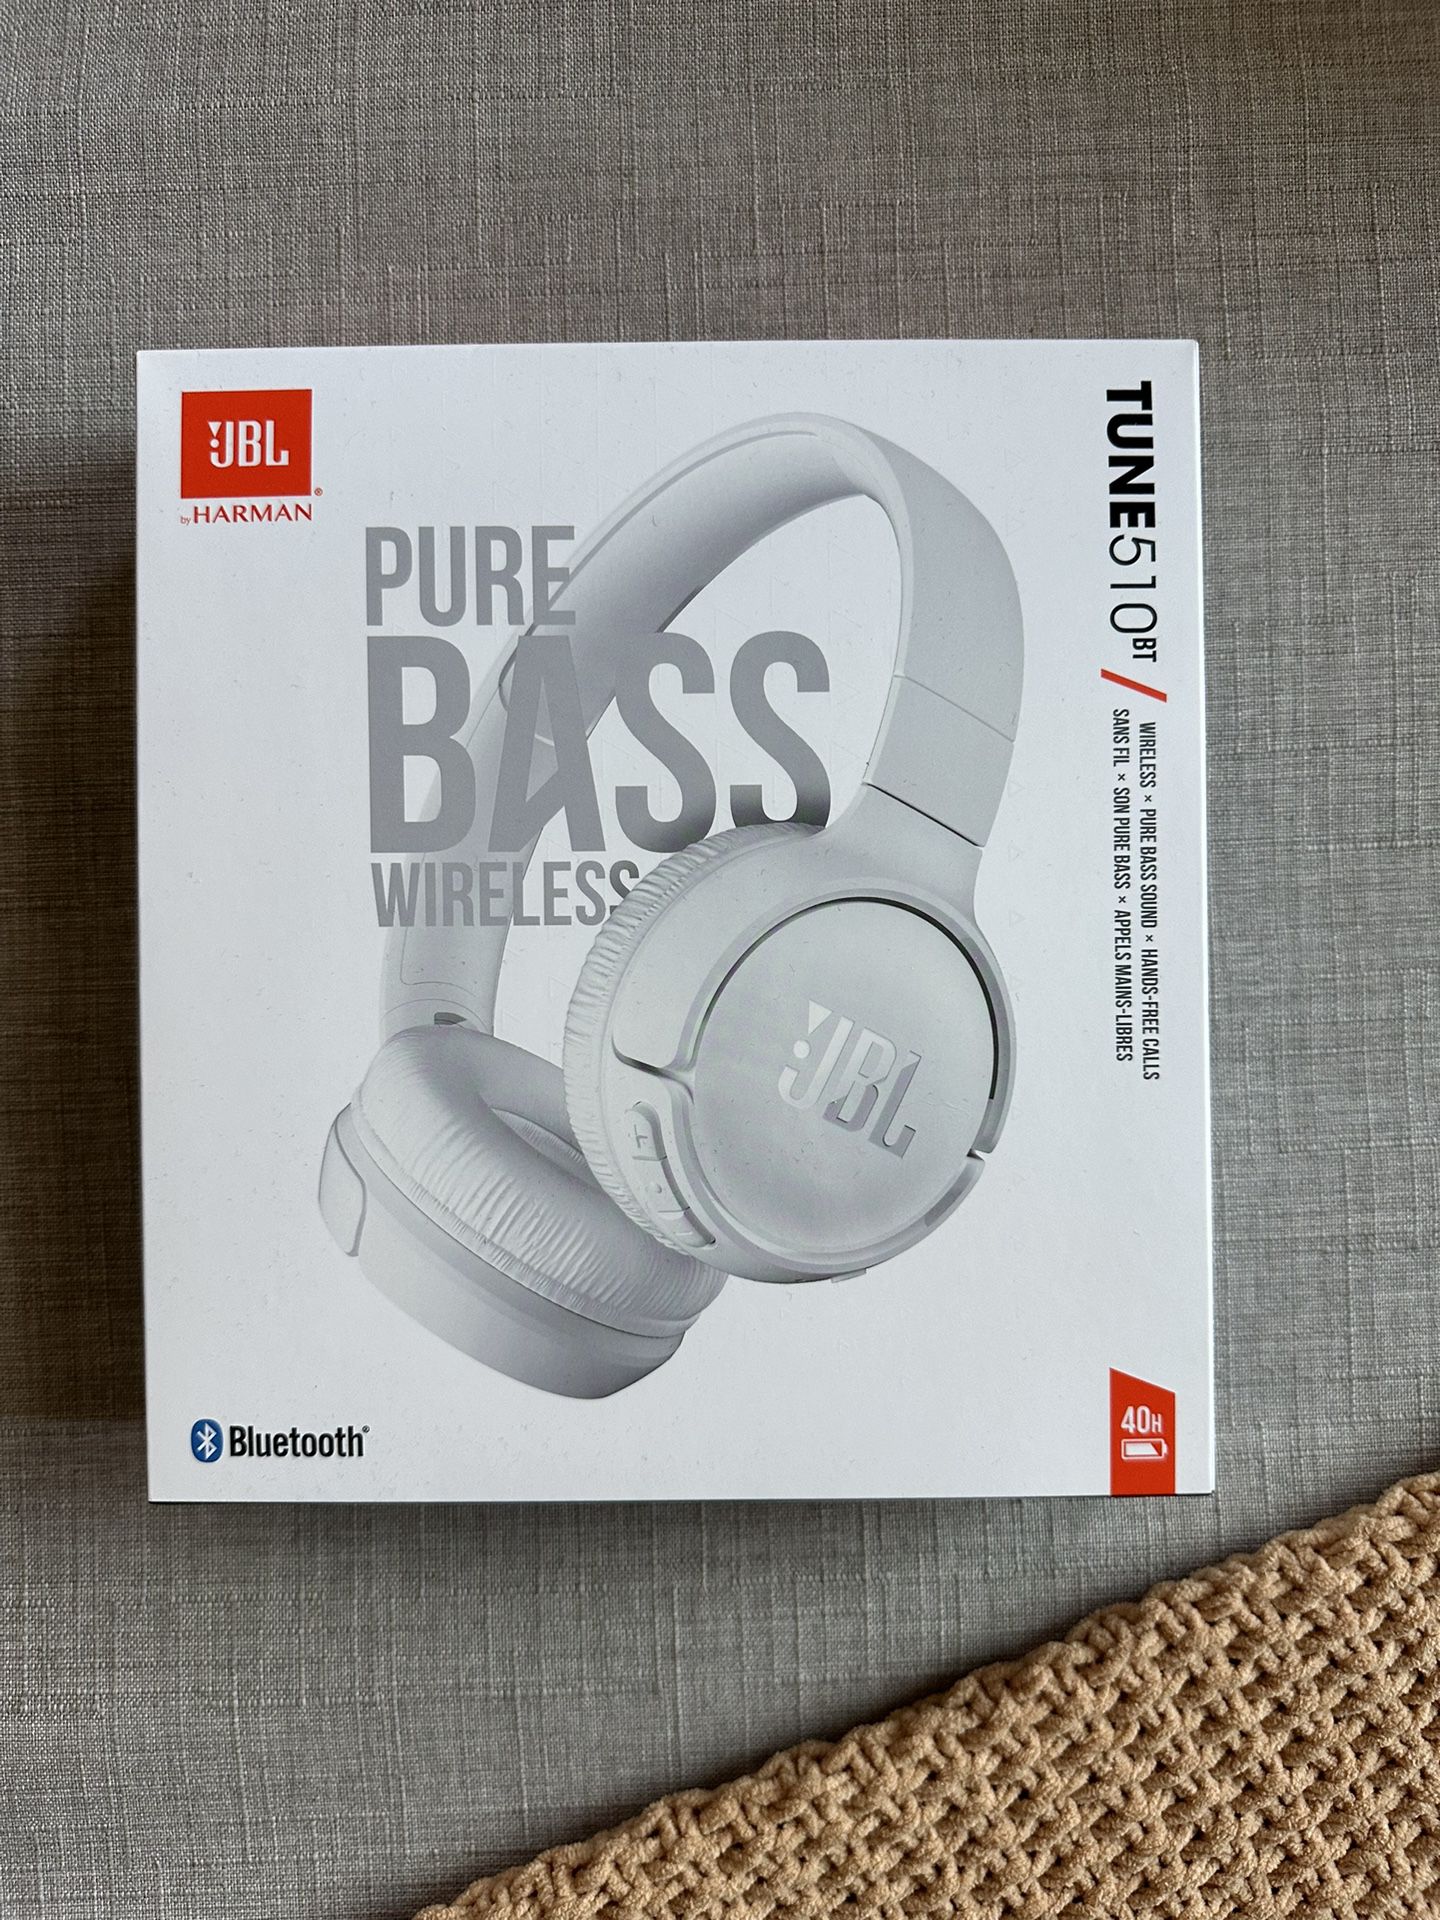 JBL Wireless Headphones With Purebass - Brand New!